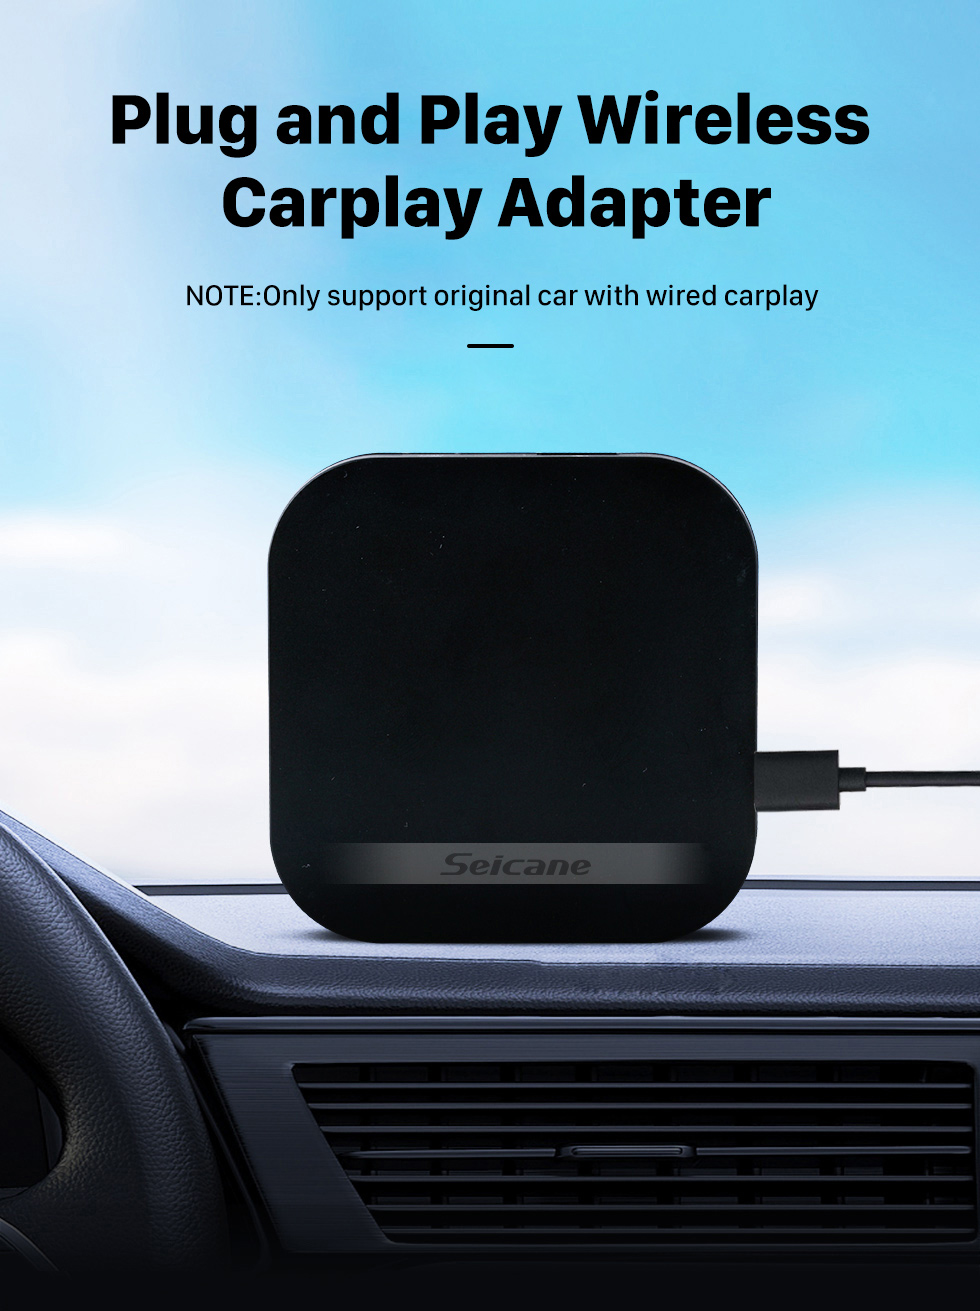 Seicane Adaptador de Carplay inalámbrico Plug and Play para soporte de Carplay con cable de fábrica BWM Benz Audi VW